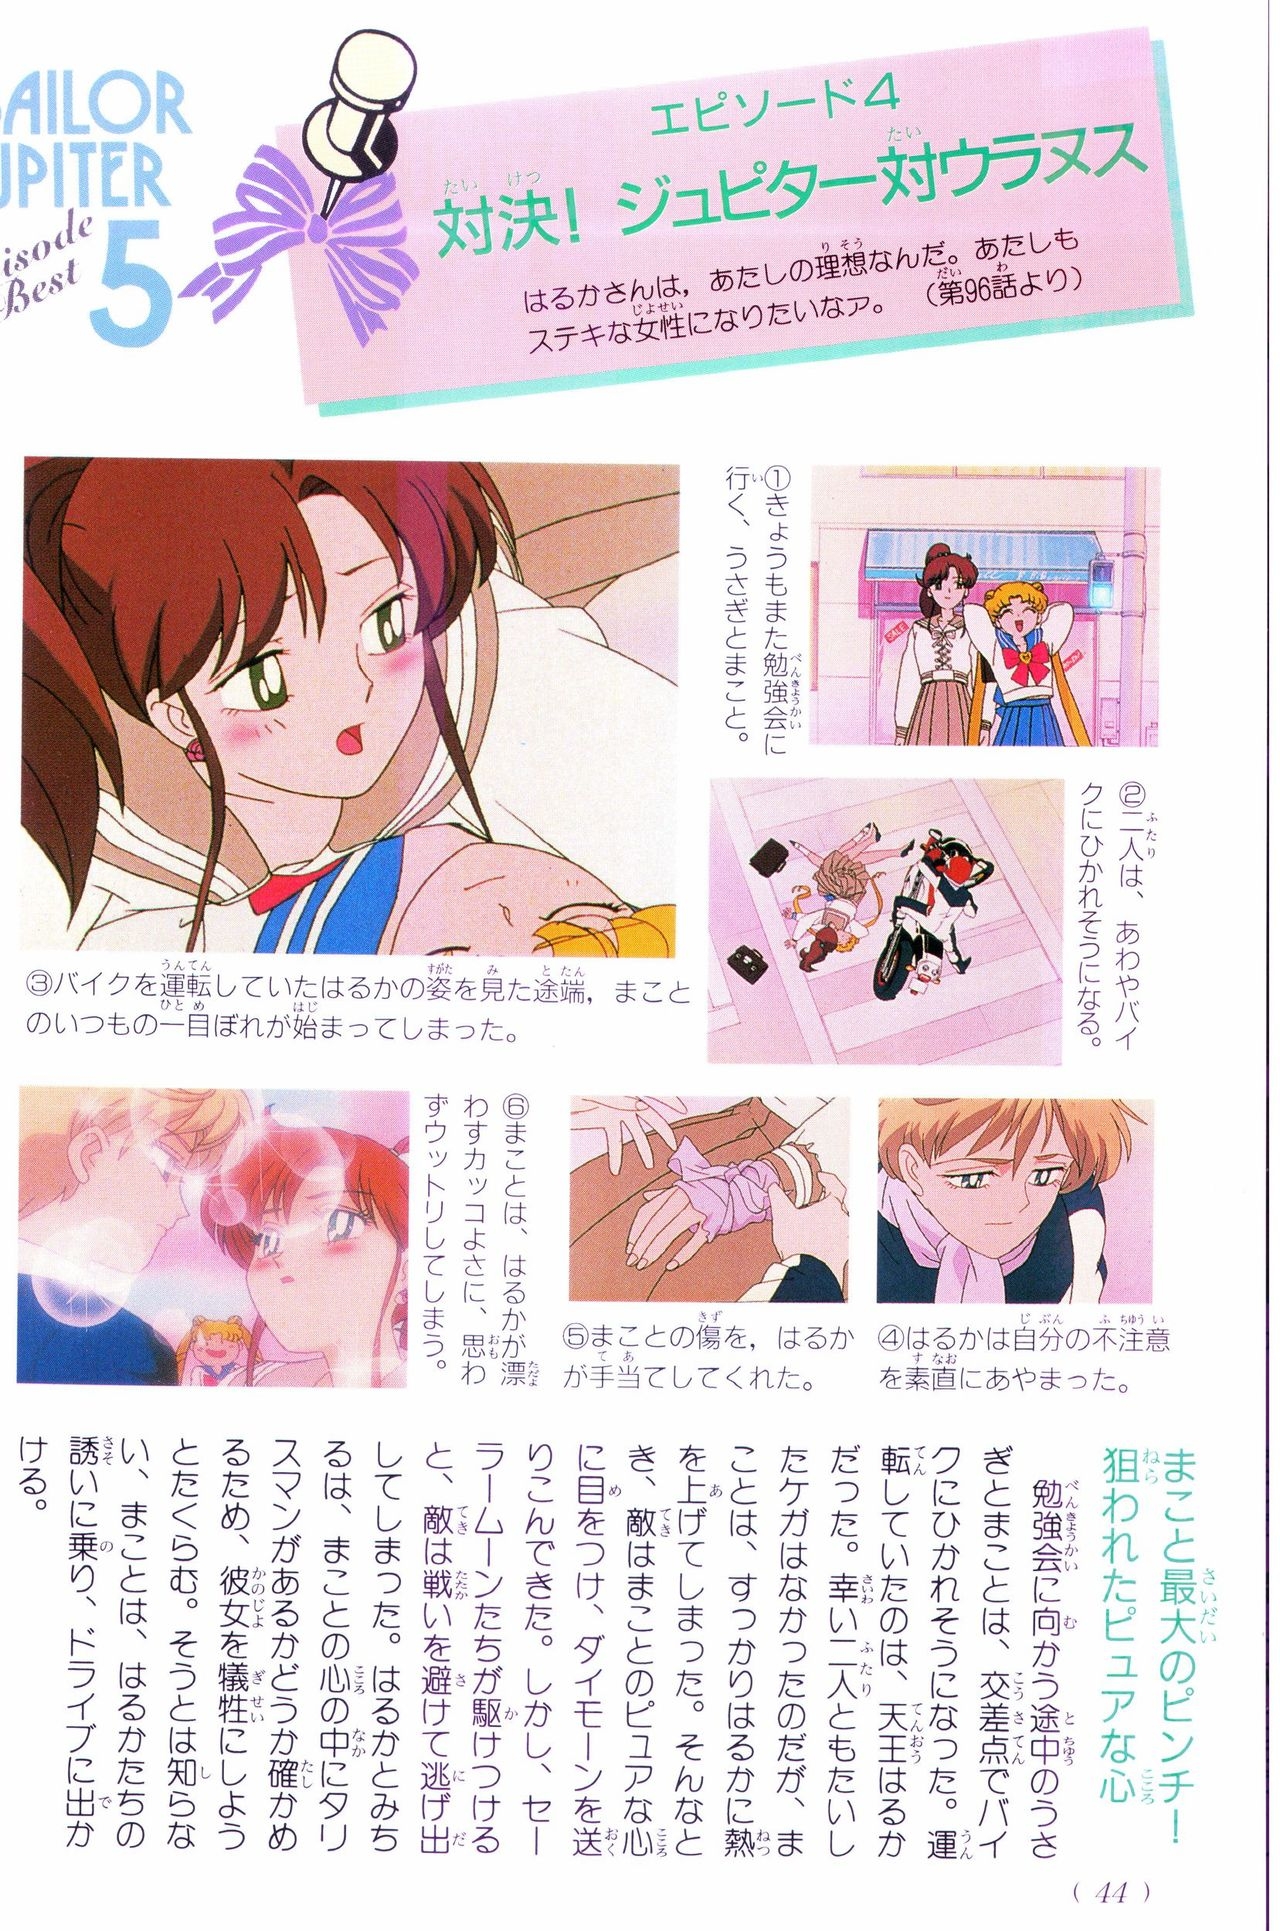 Sailor Moon Official Fan Book – Sailor Jupiter 35